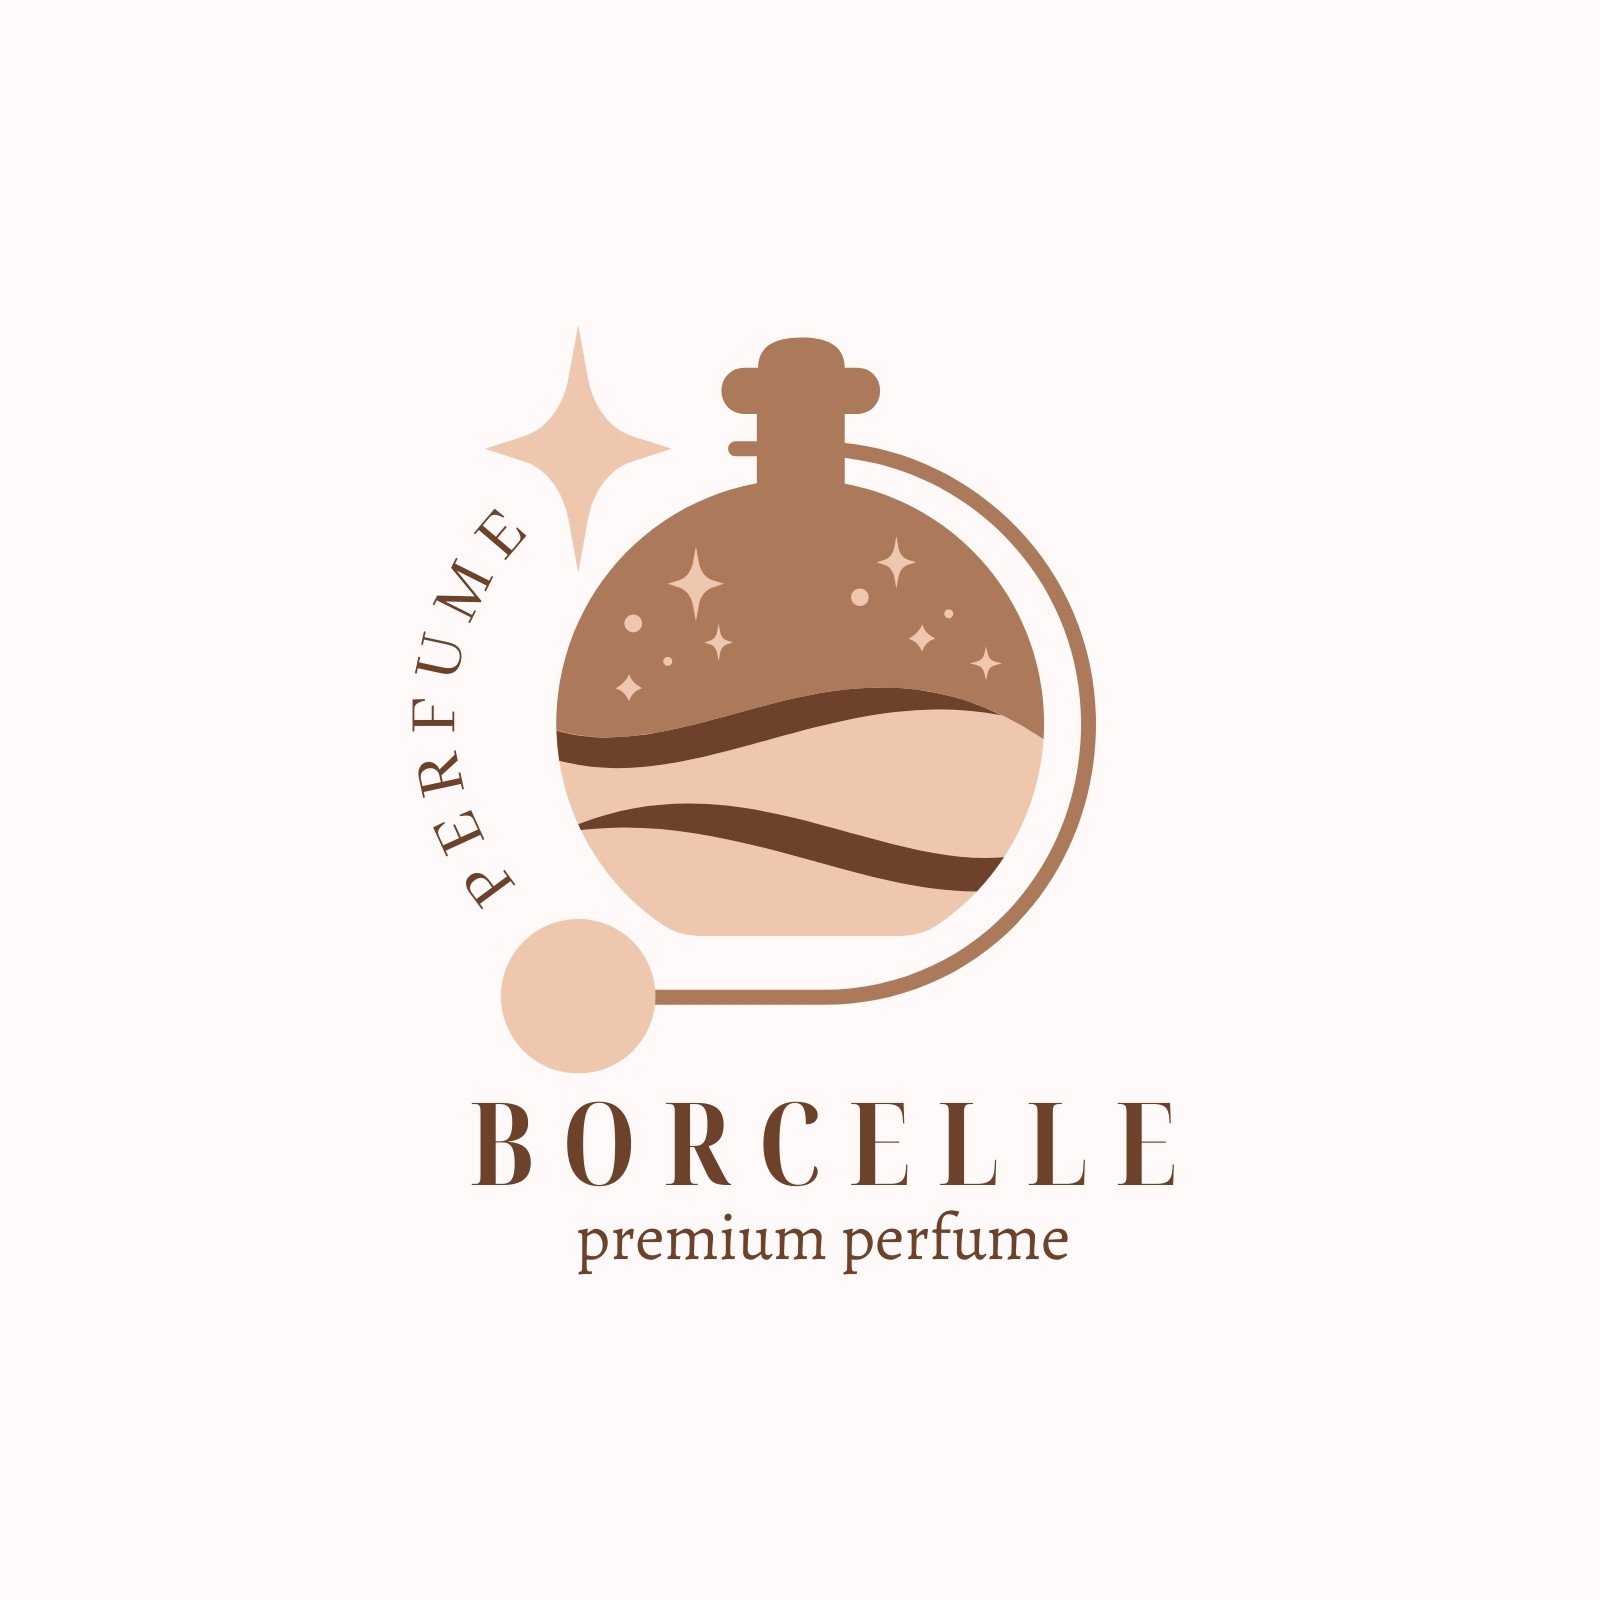 Free Perfume Logo Designs